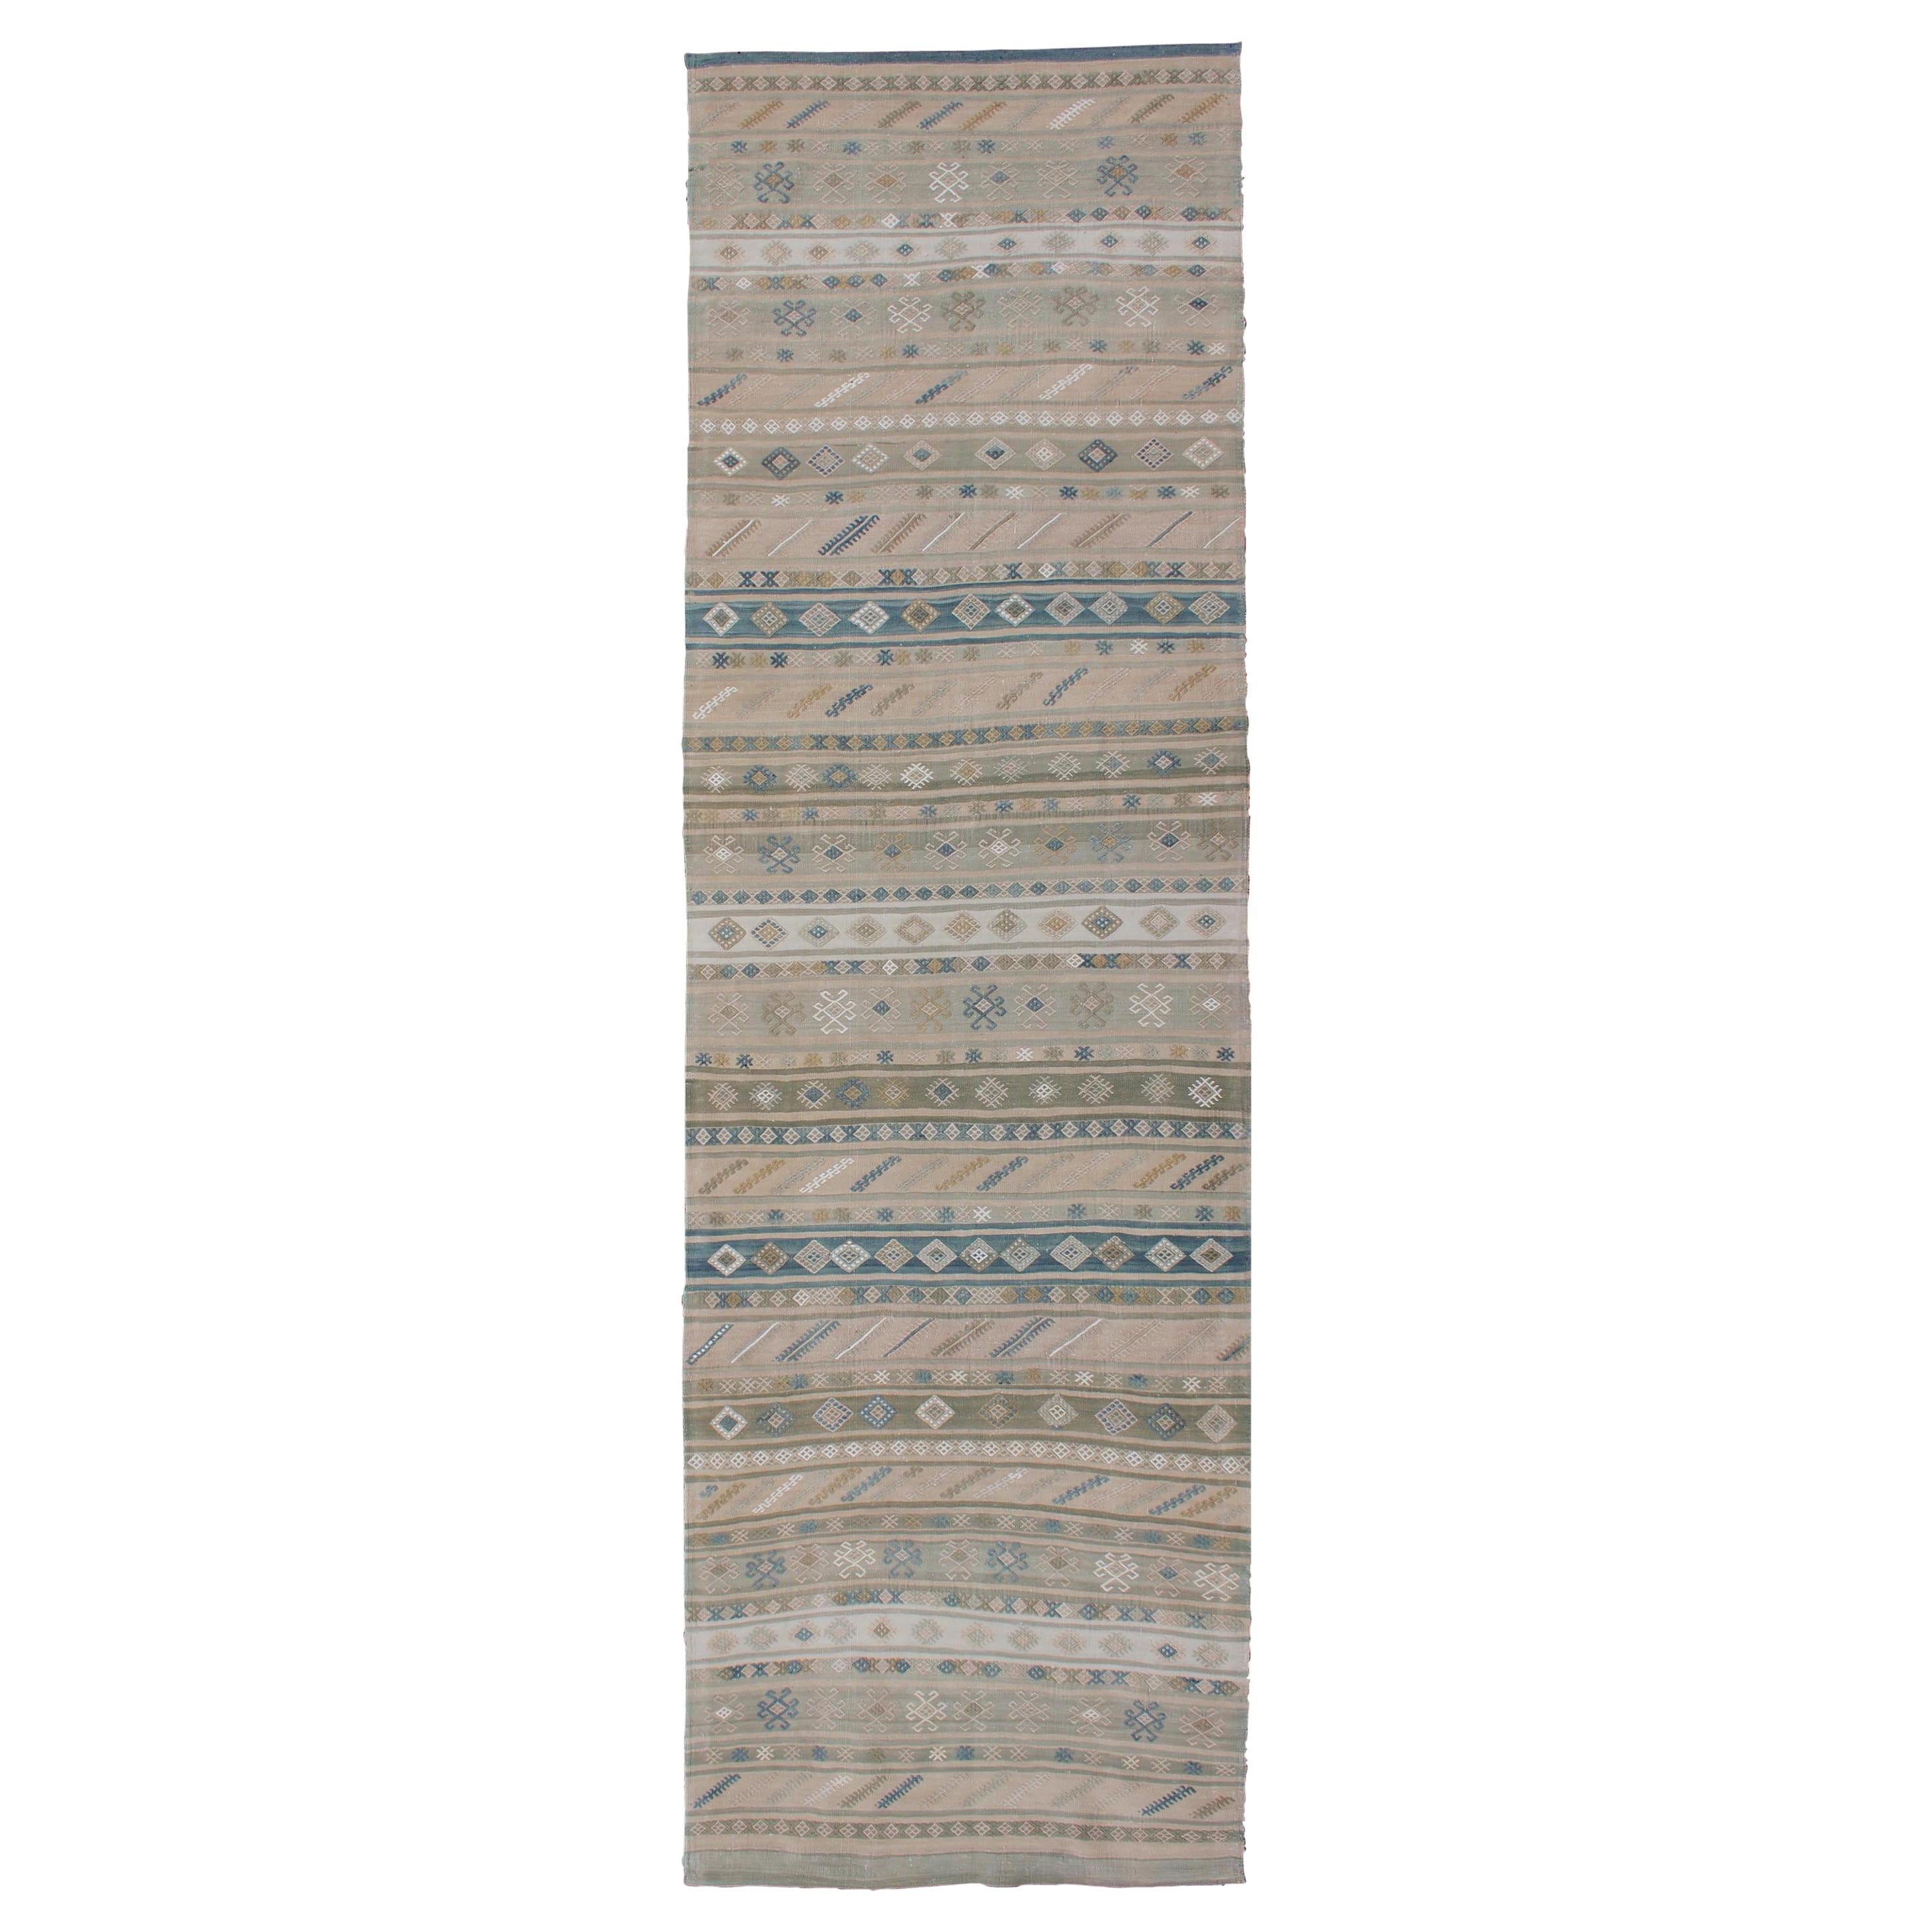 Natural-Toned Turkish Flat-Weave Kilim with Geometric Stripes